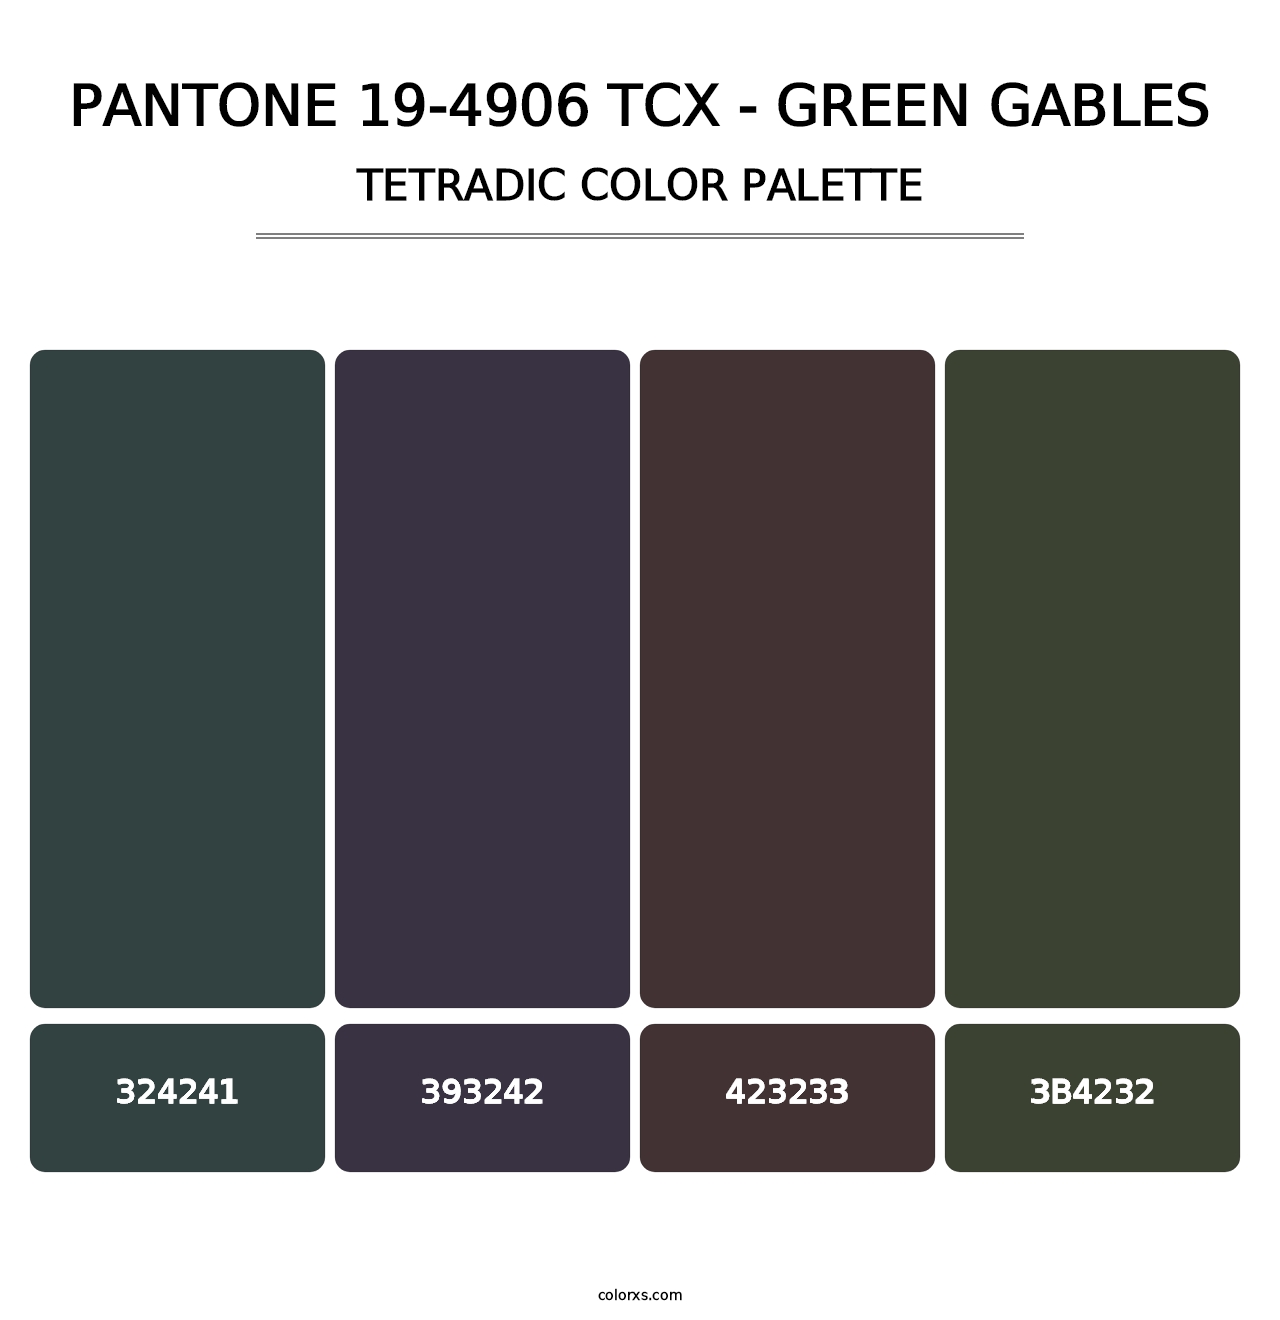 PANTONE 19-4906 TCX - Green Gables - Tetradic Color Palette